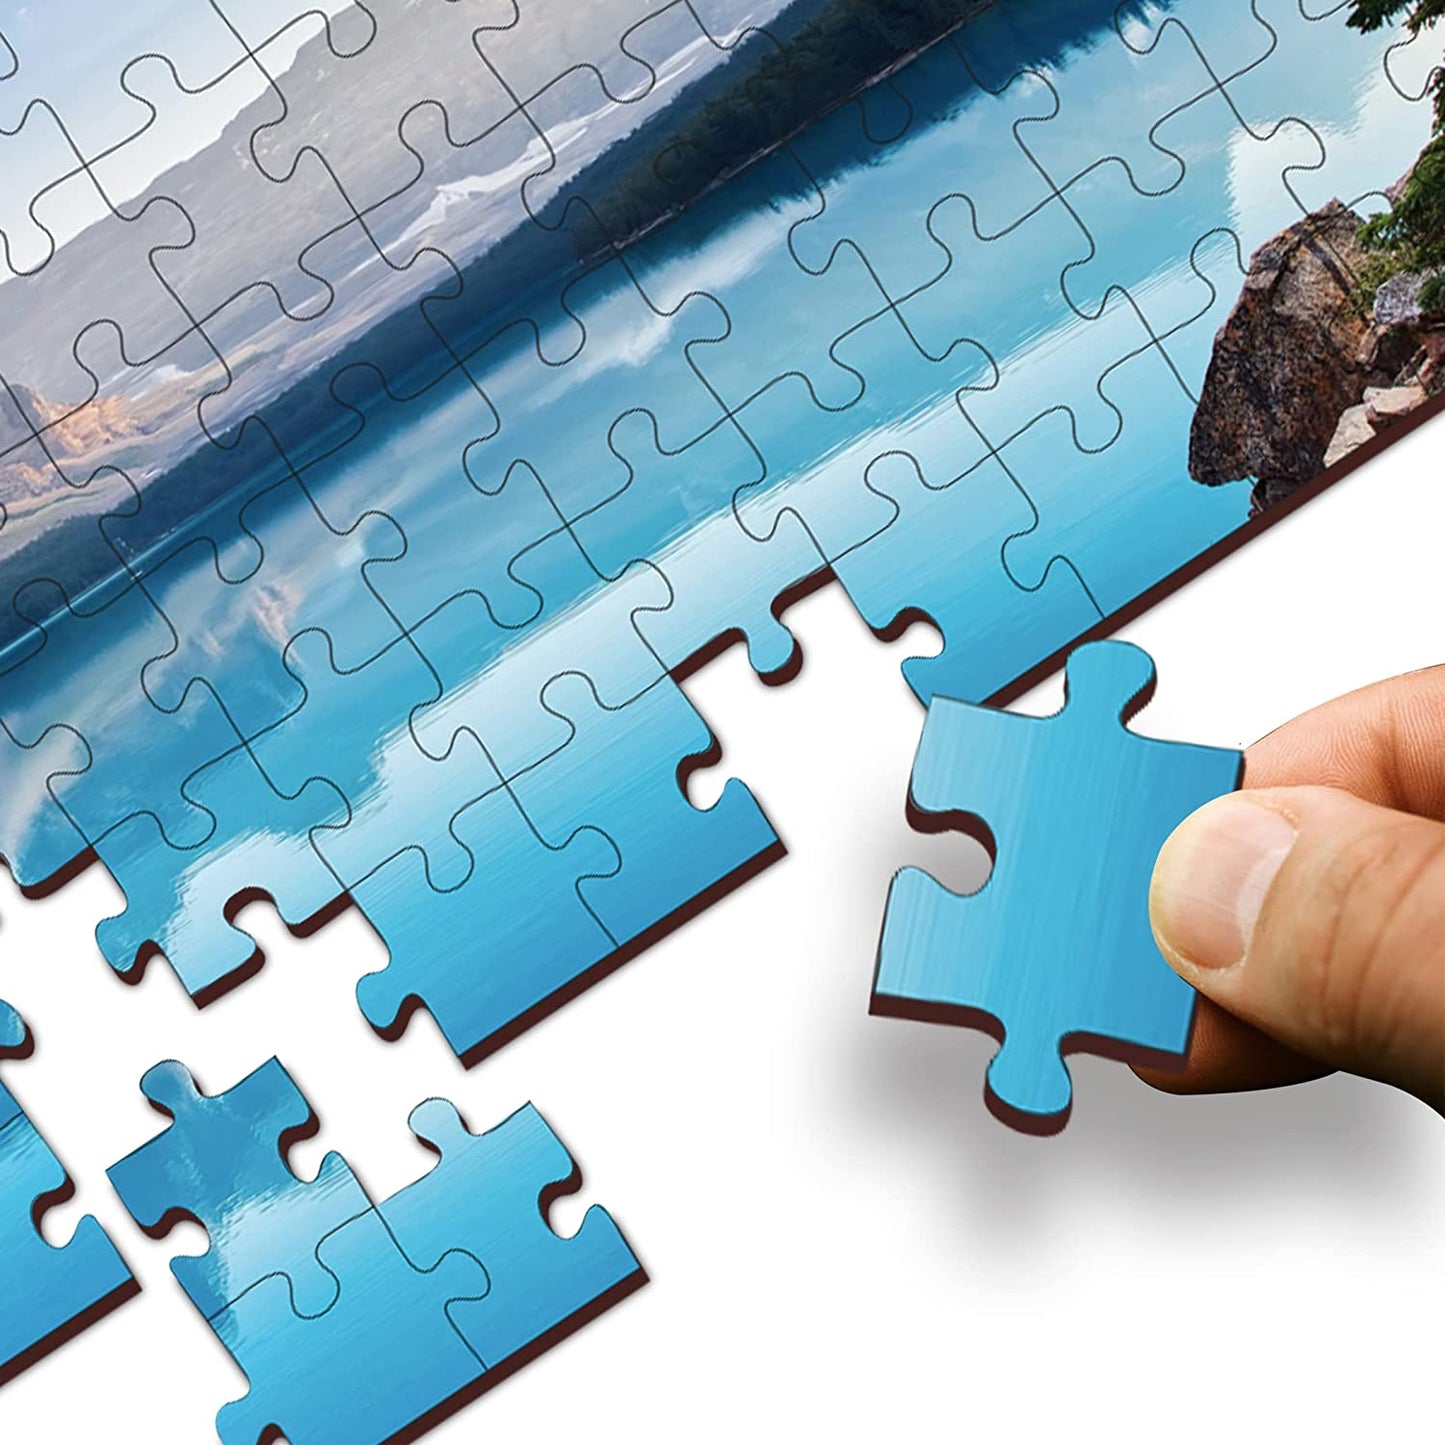 Moraine Lake Wooden Jigsaw Puzzle (108 Pcs)